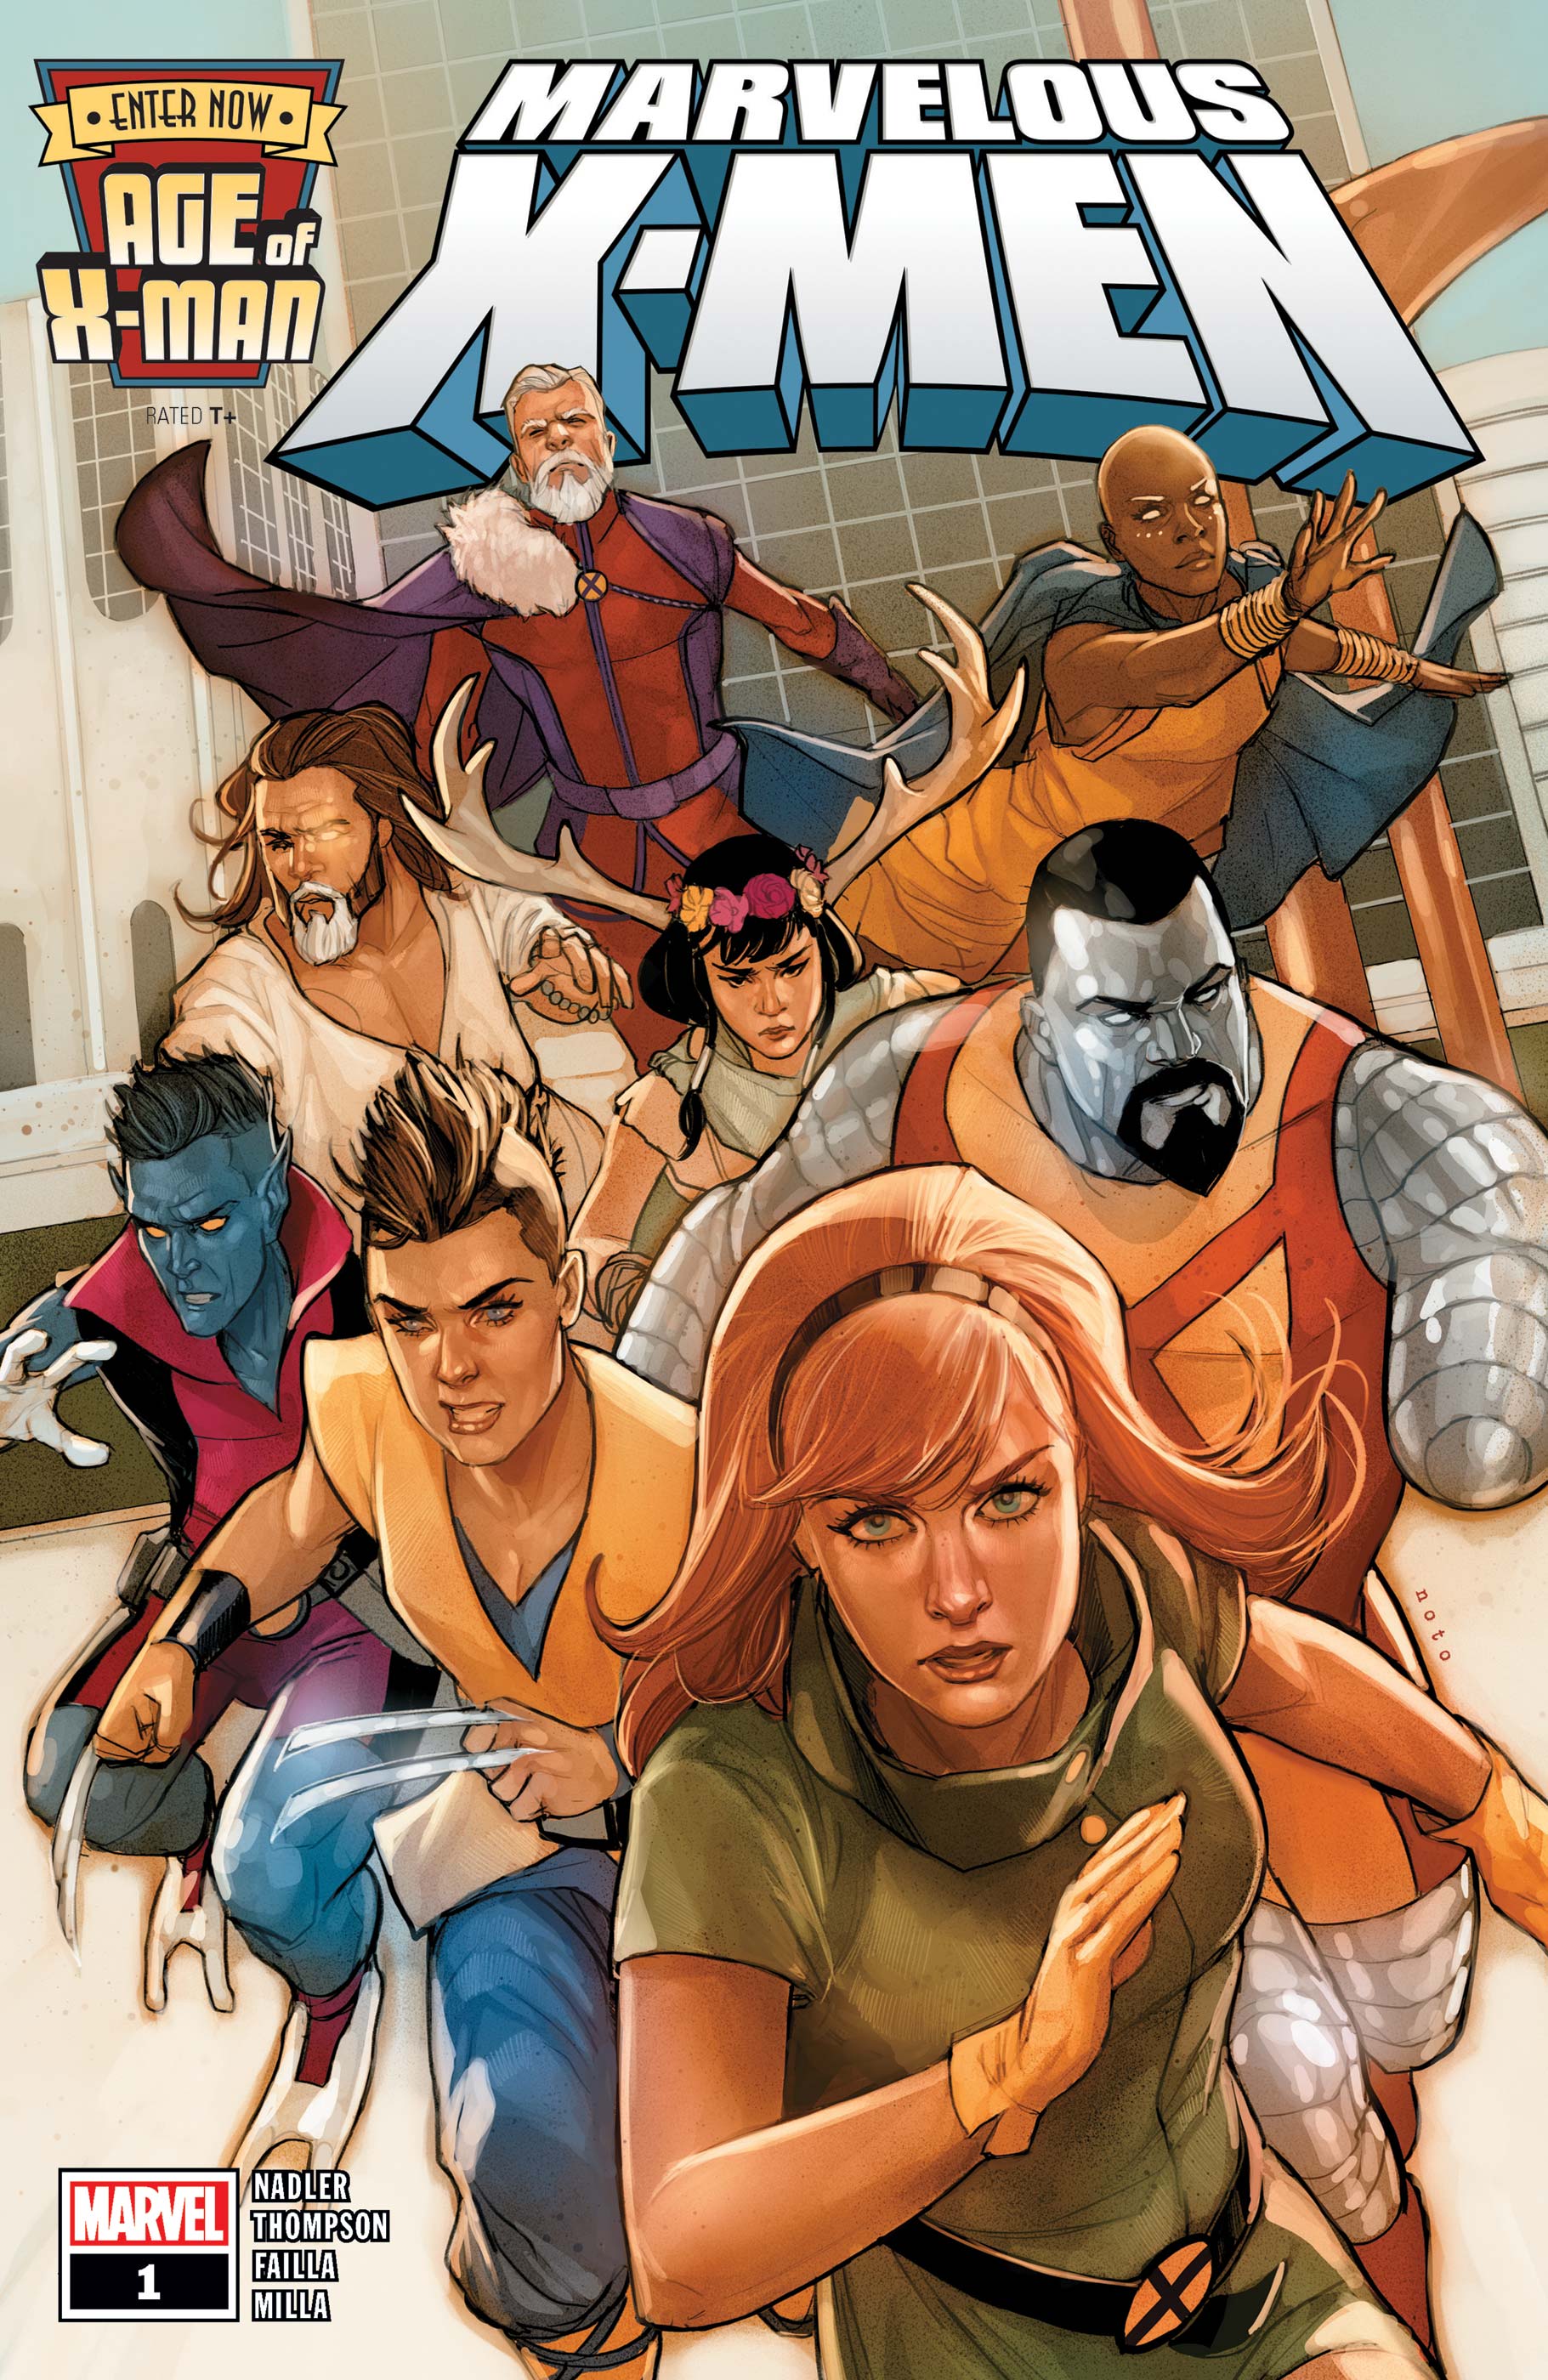 Age of X-Man: The Marvelous X-Men (2019) #1